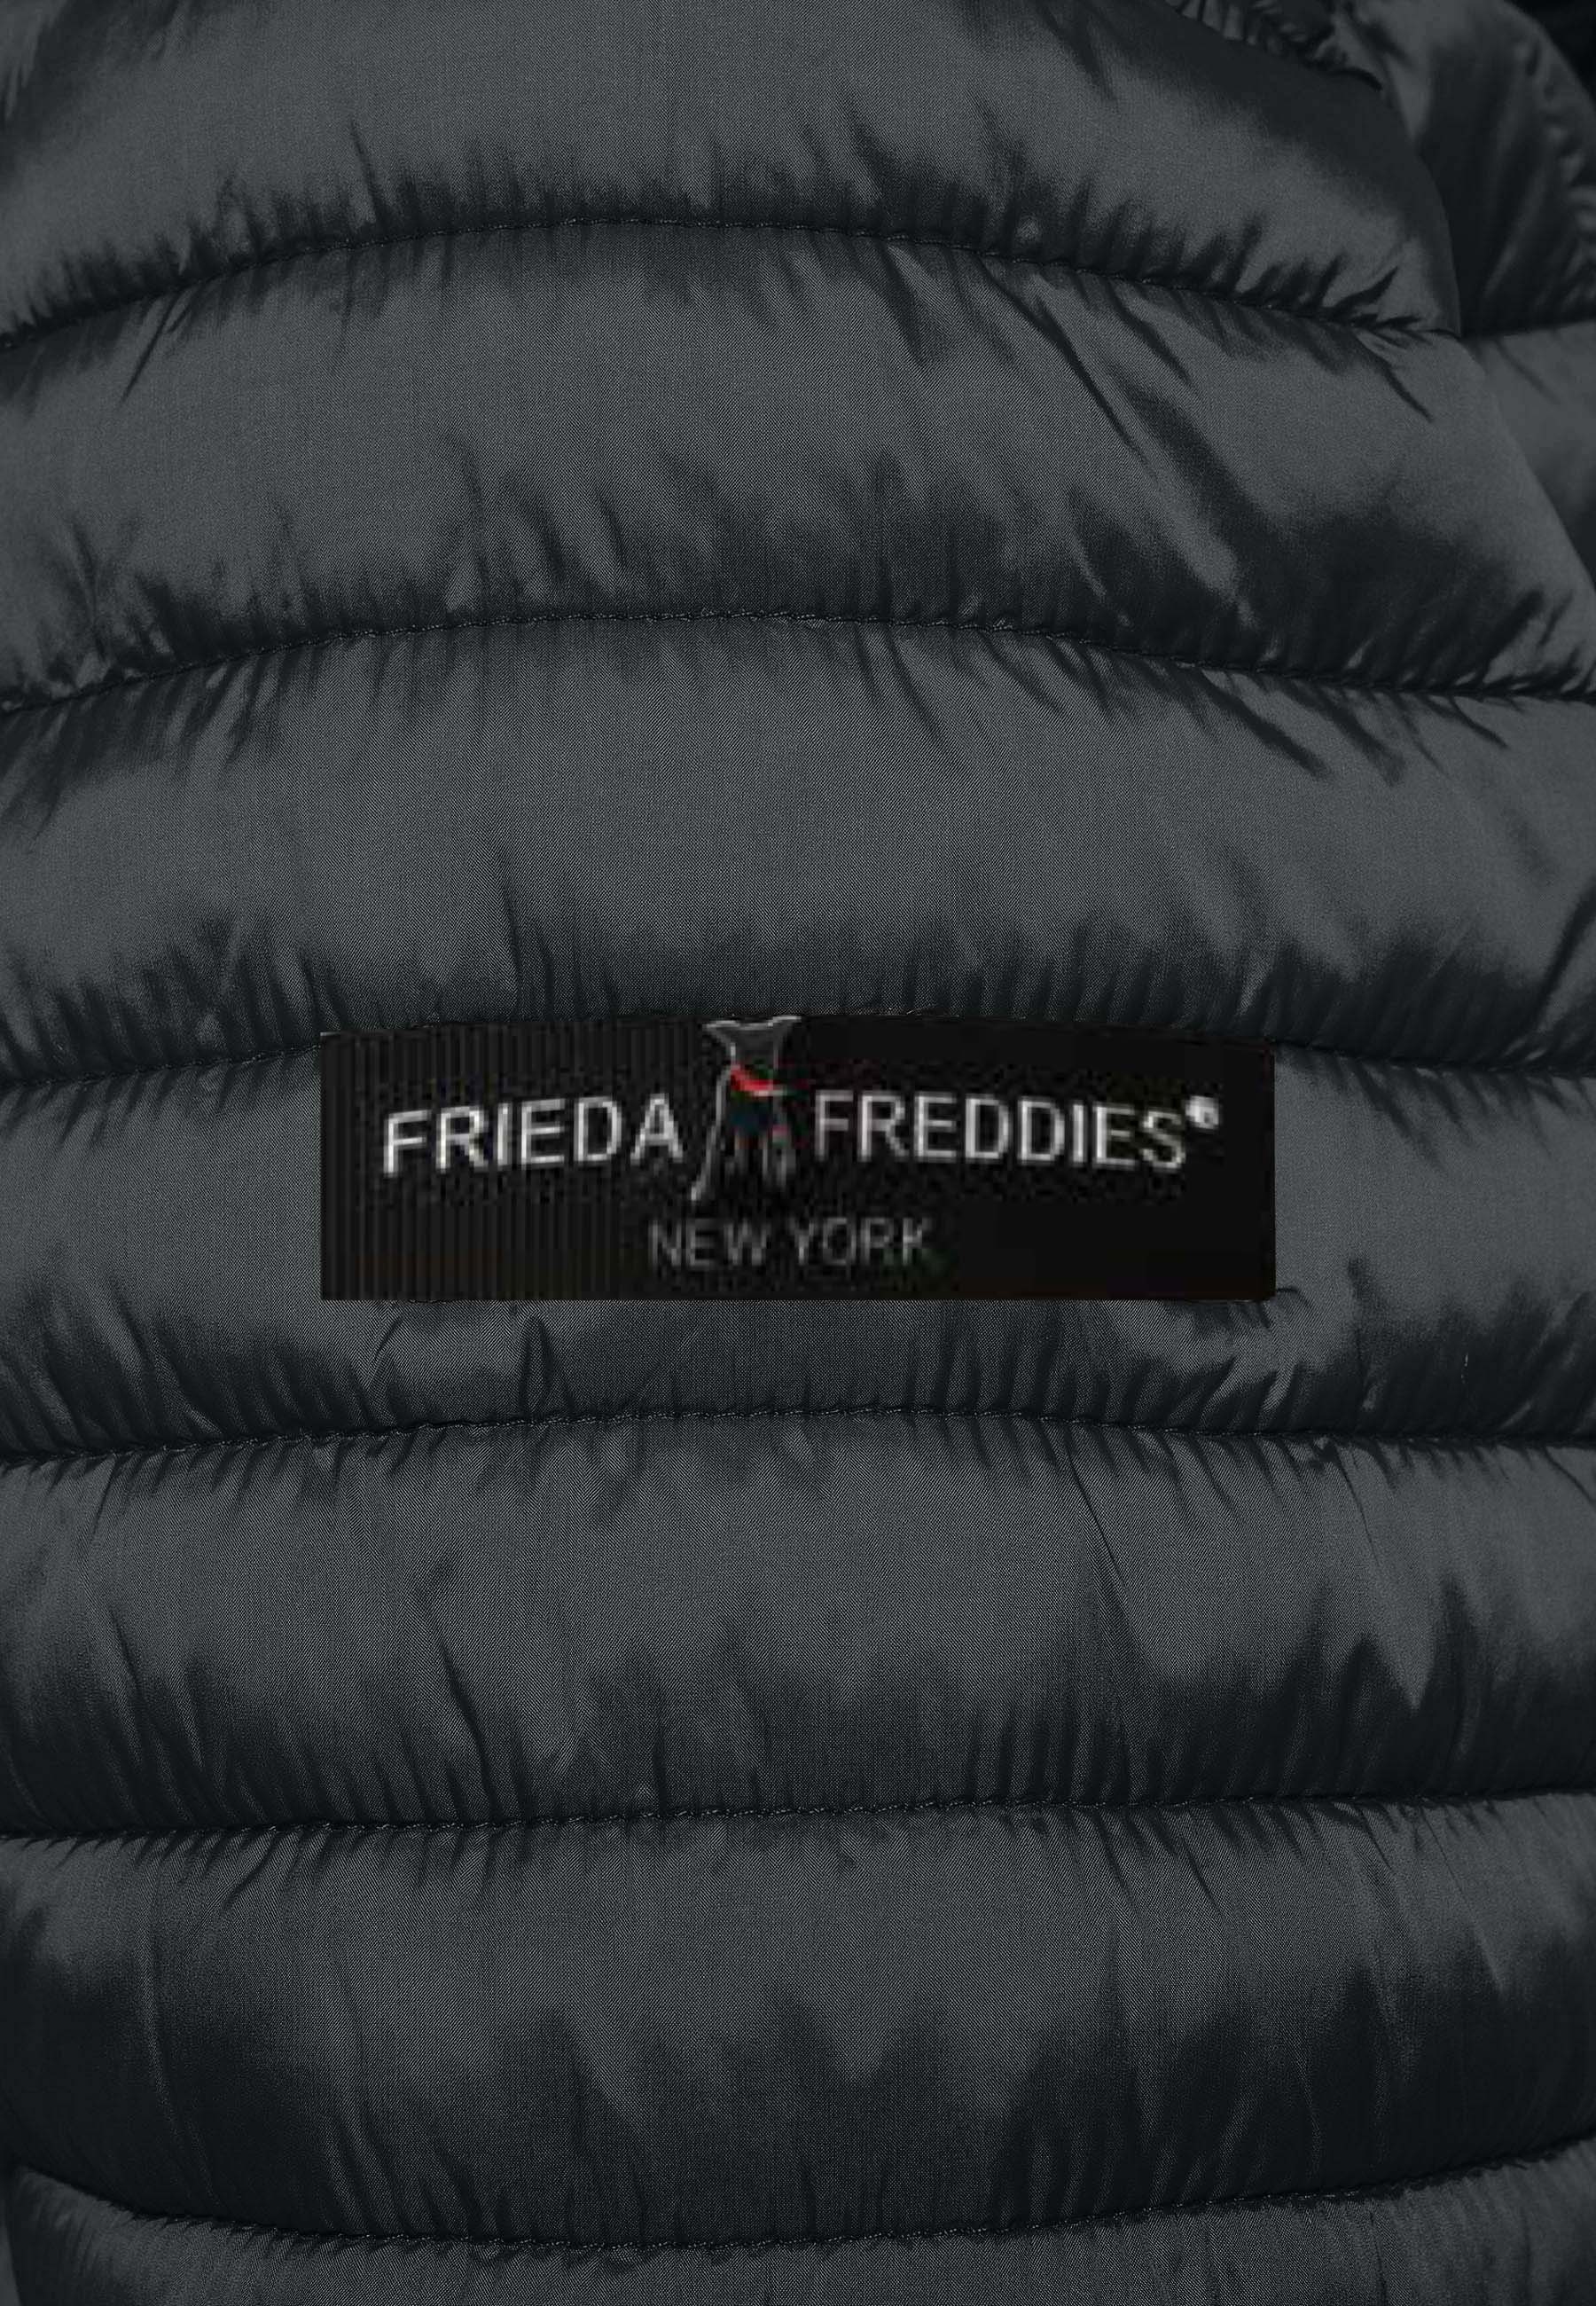 Fake Down Jacket, Frieda NY Freddies & grauschwarz Friday Winterjacke